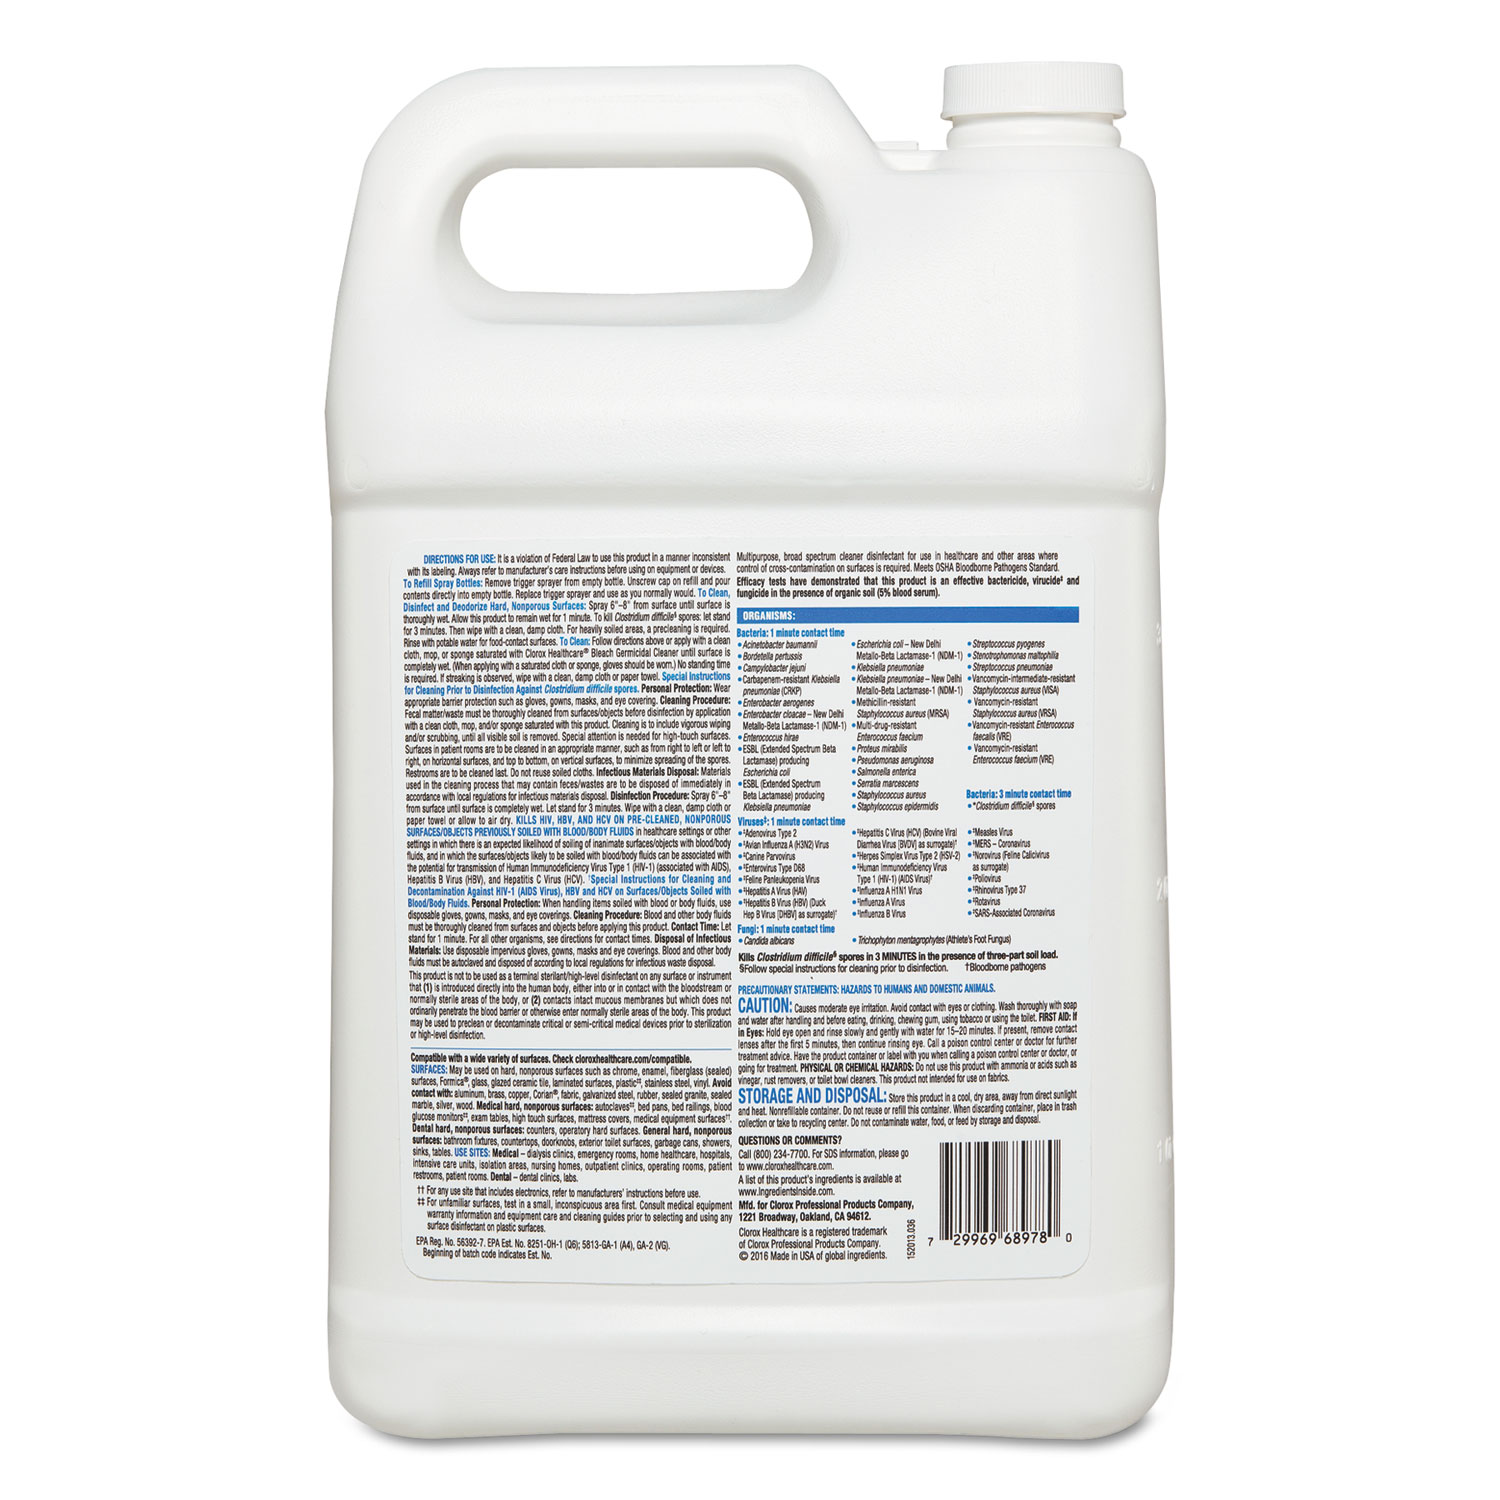 Bleach Germicidal Cleaner, 128 oz Refill Bottle